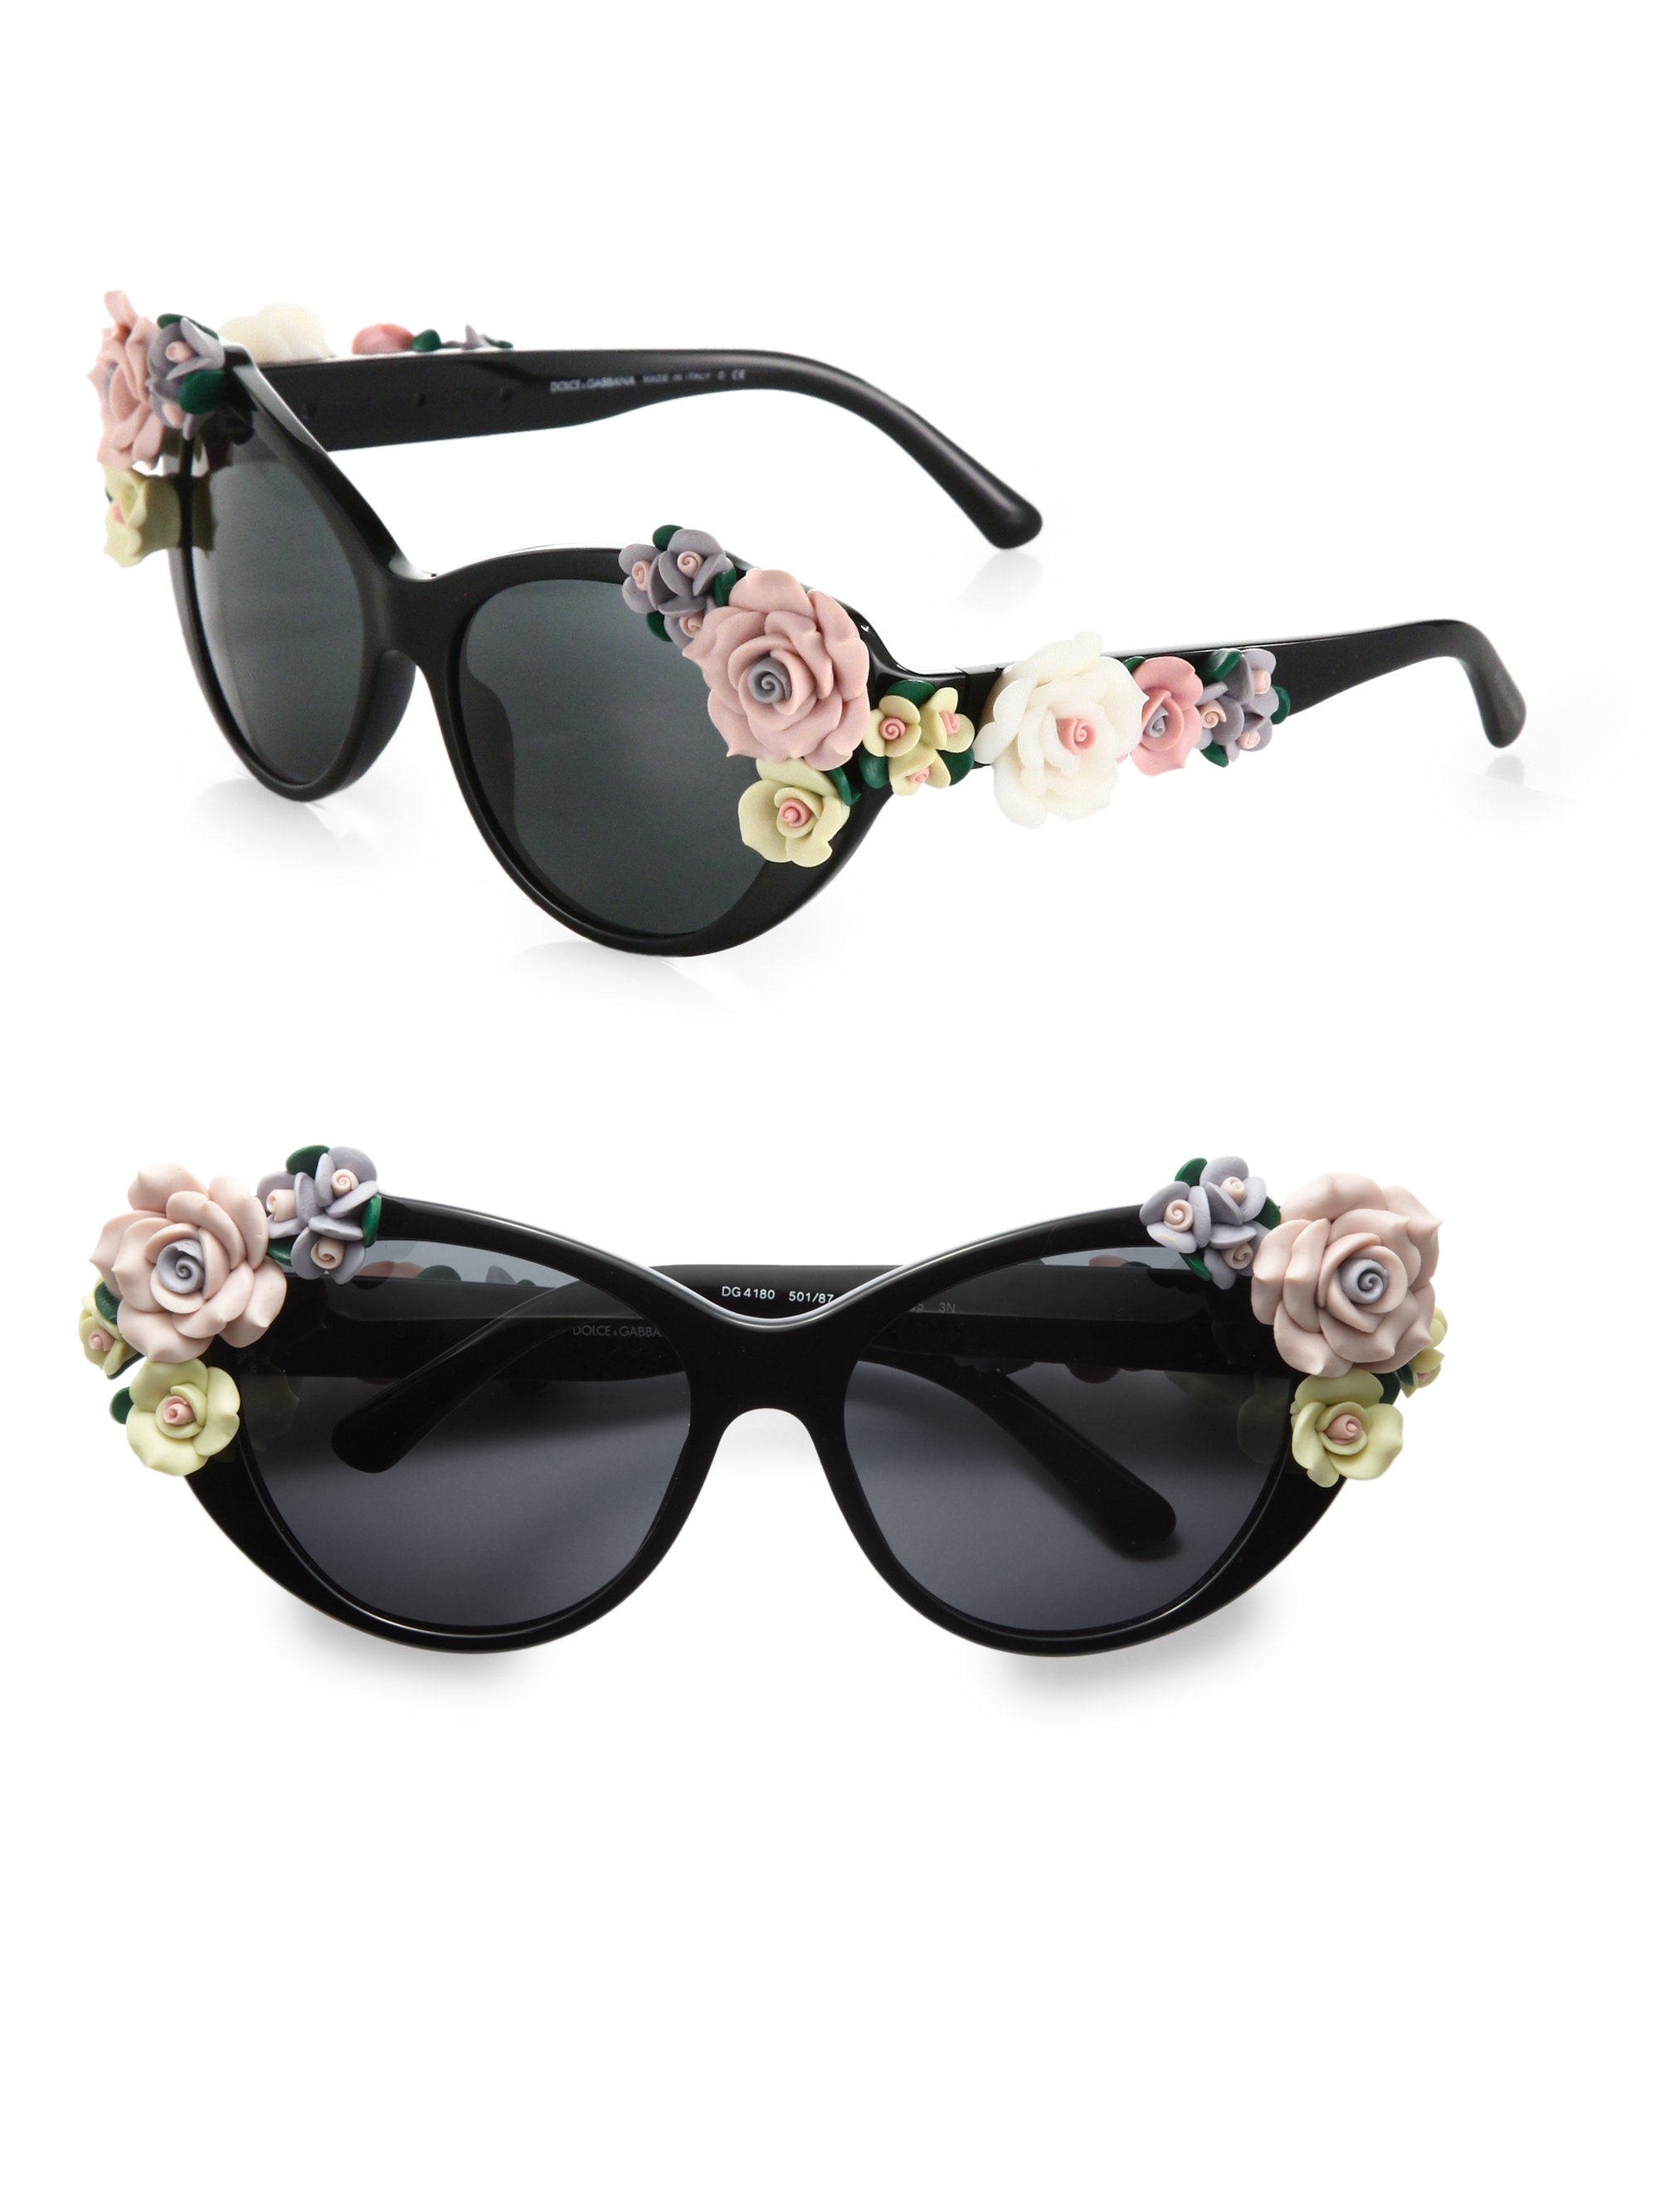 Lyst - Dolce & gabbana Garden Flowers Catseye Sunglasses in Black